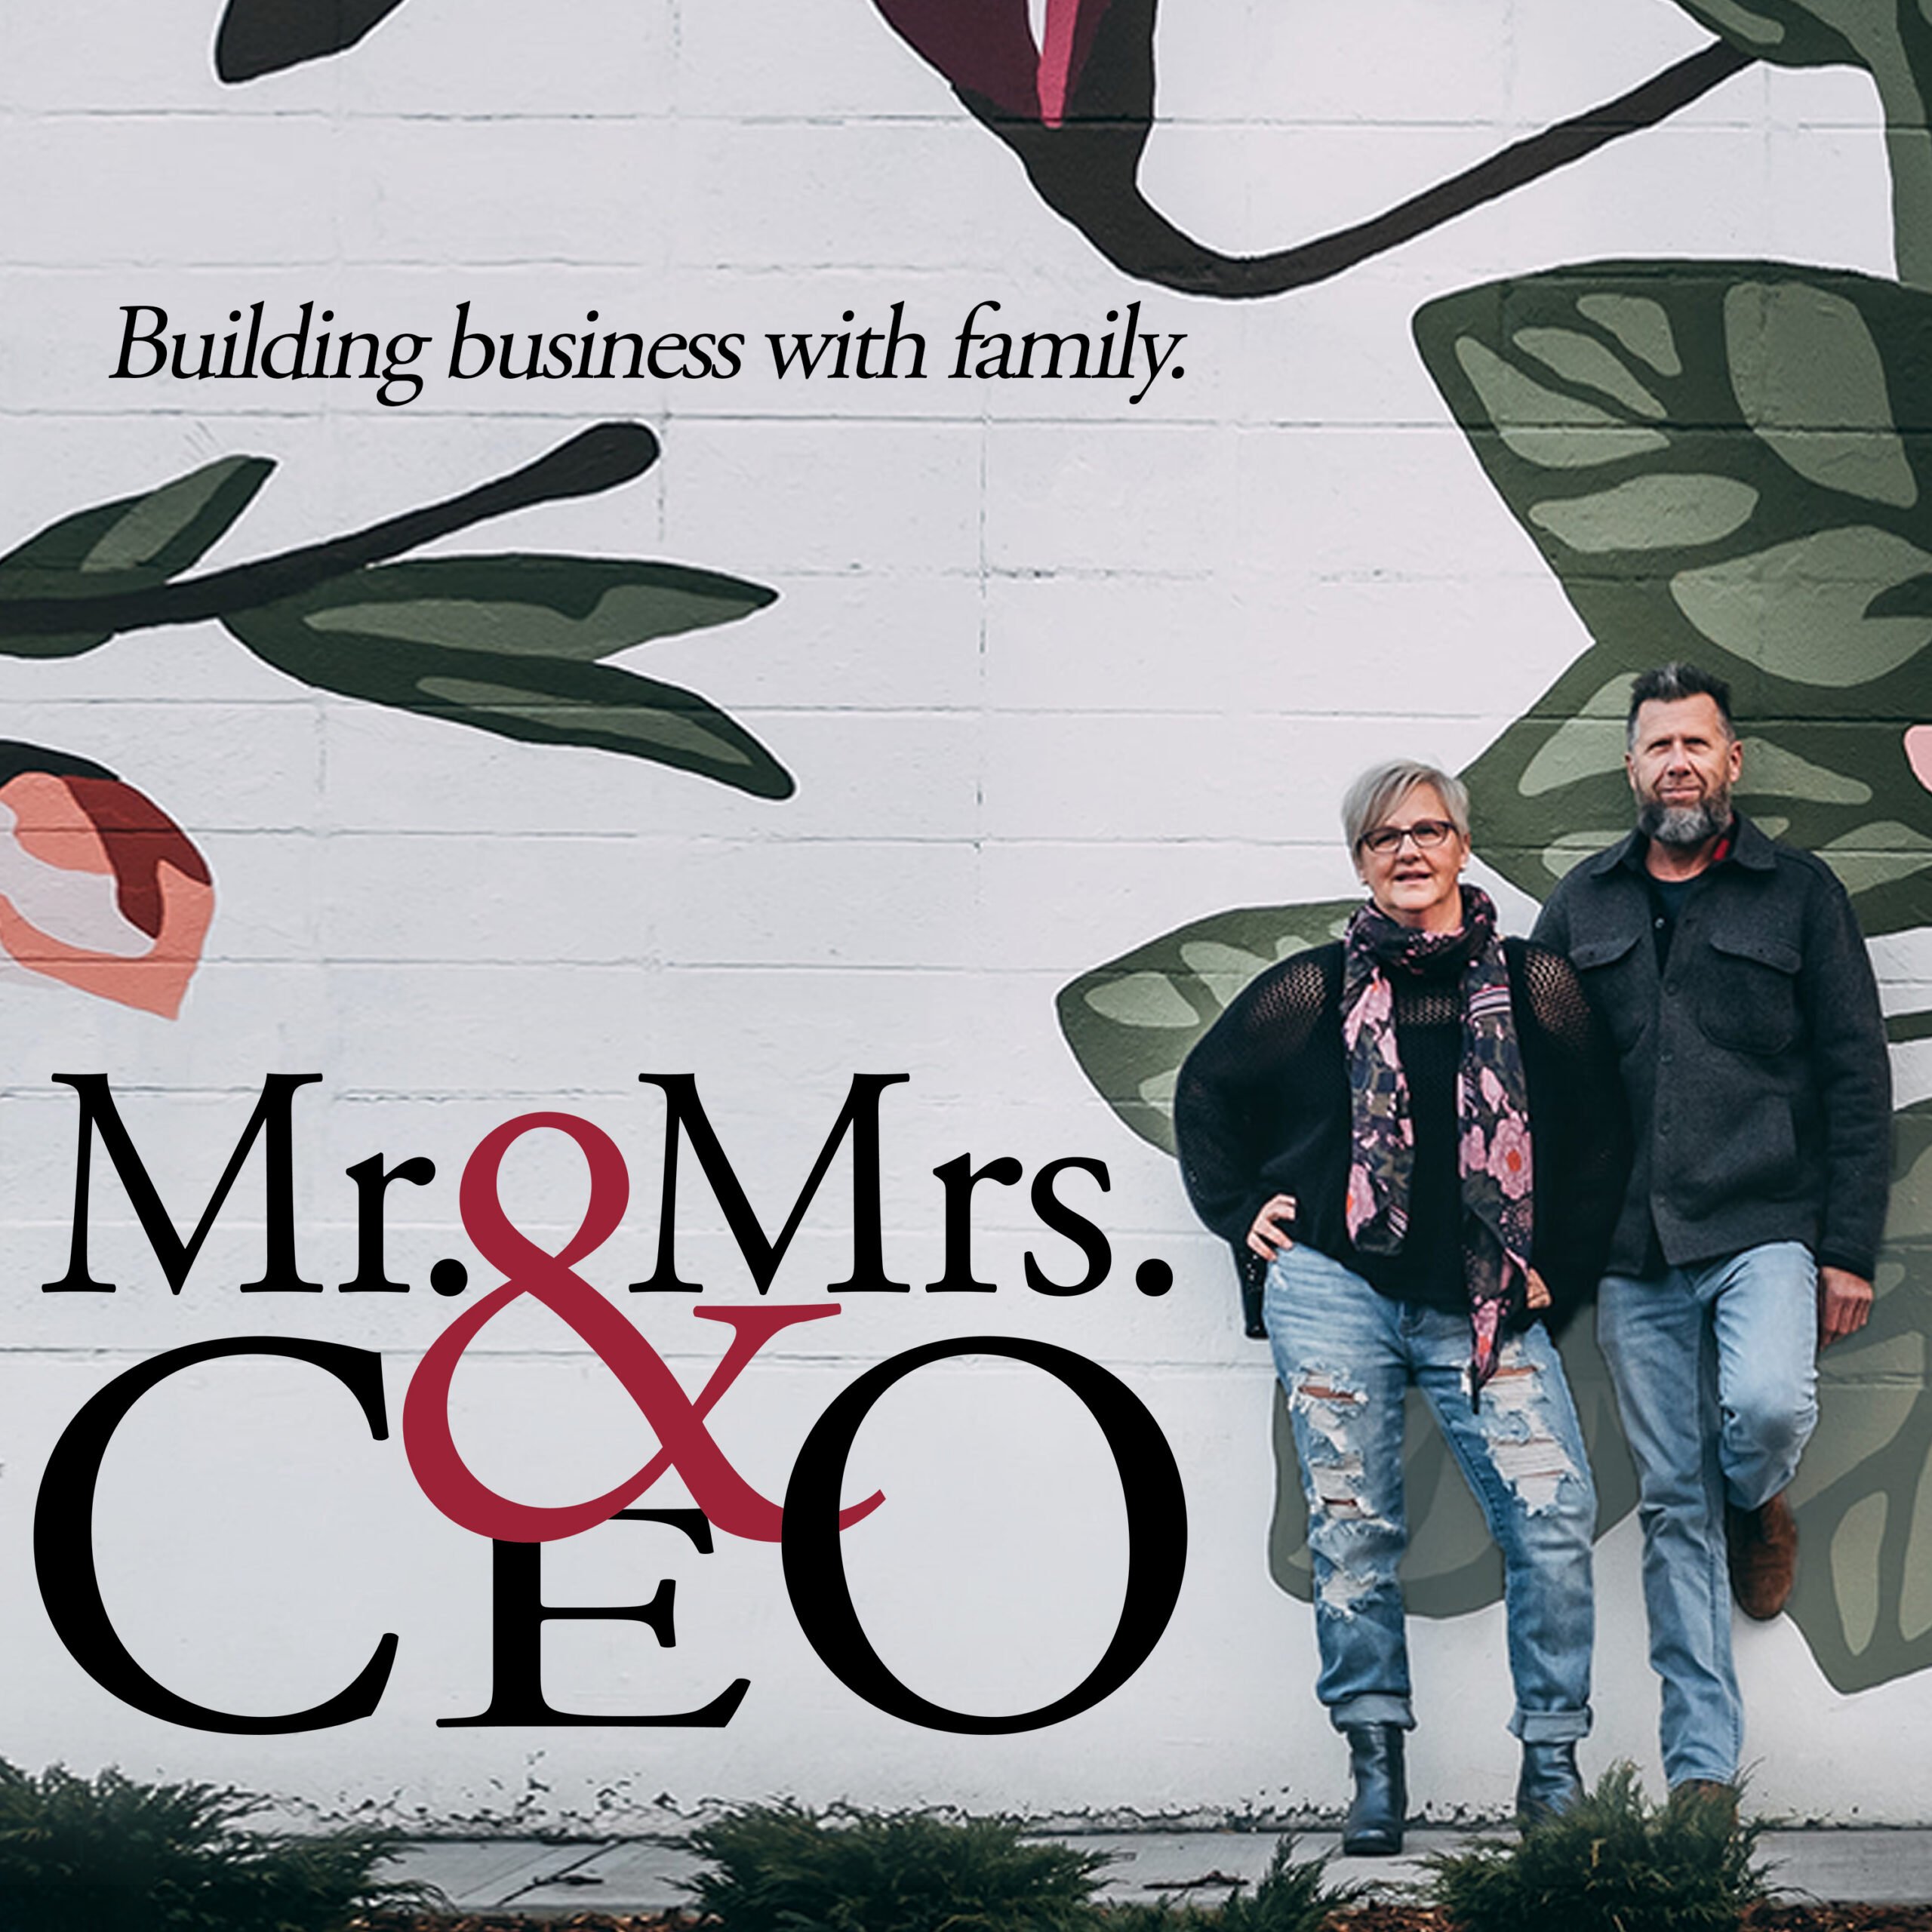 Mr. & Mrs. CEO